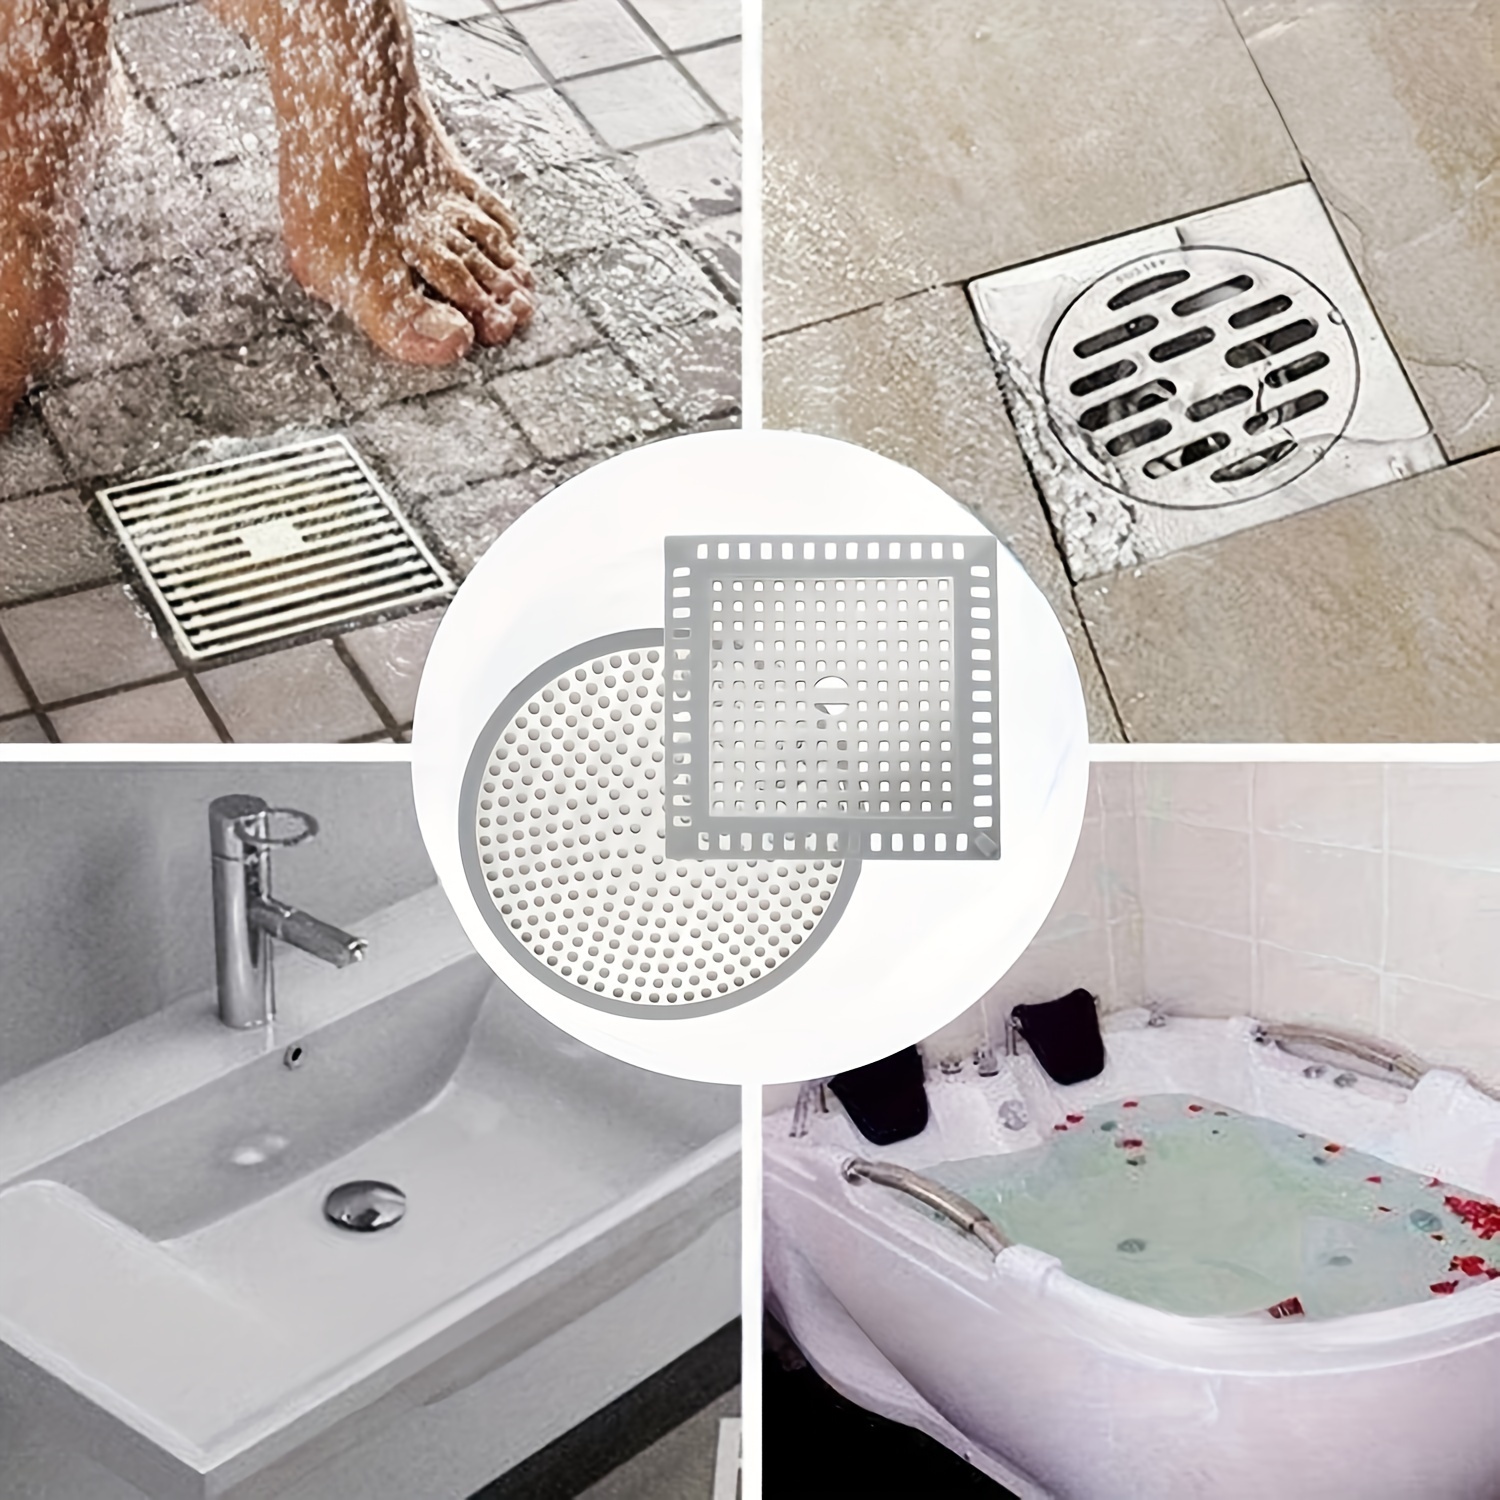 LEKEYE Shower Drain Hair Catcher | Bathtub Stopper/Shower Drain Cover/Drain  Protector for Bathtub and Bathroom